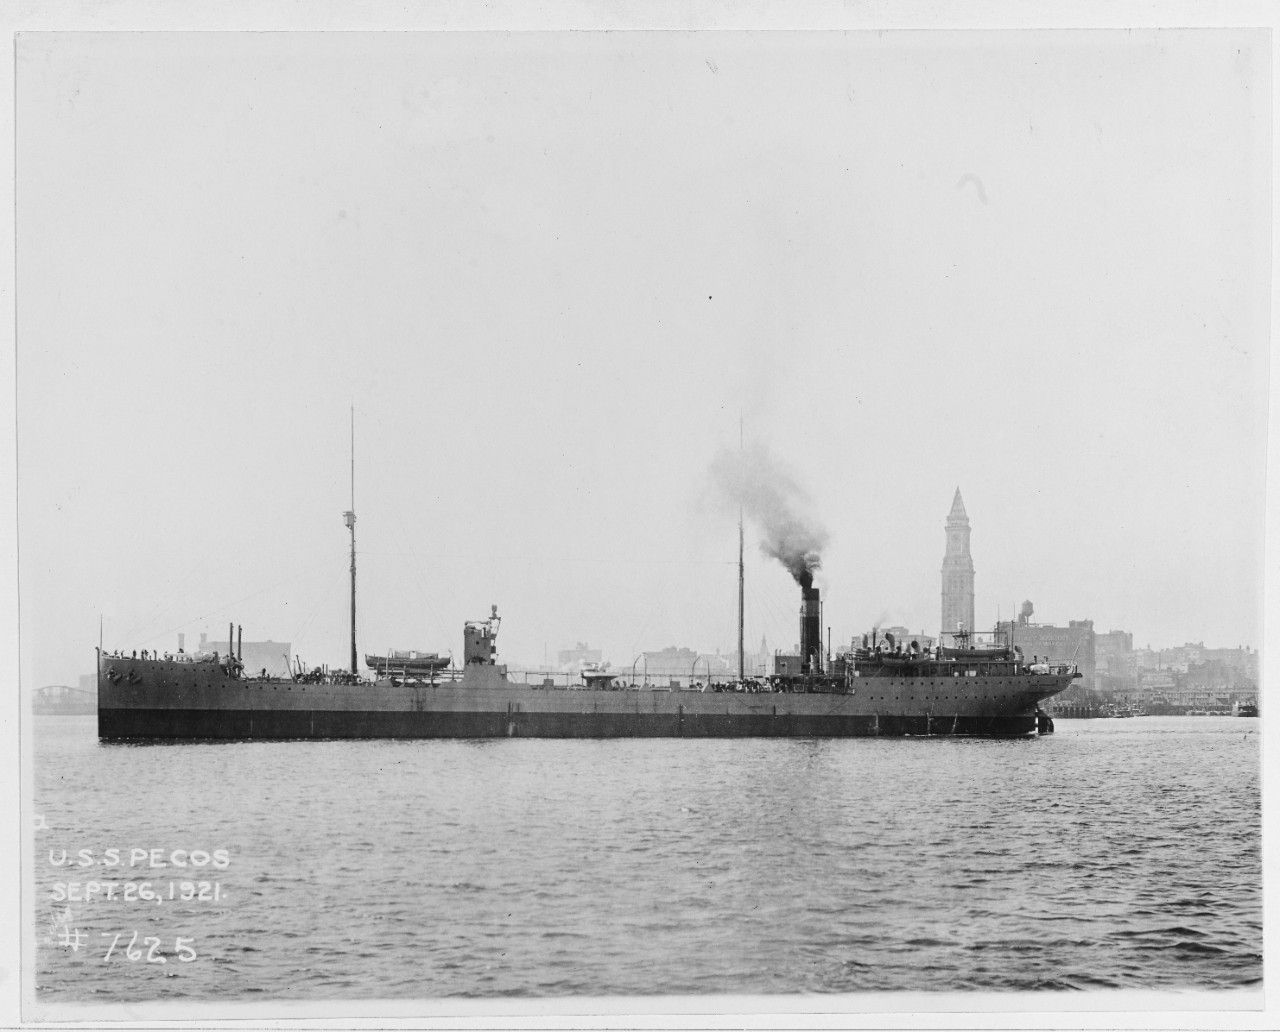 USS PECOS (AO-6), 1921-42